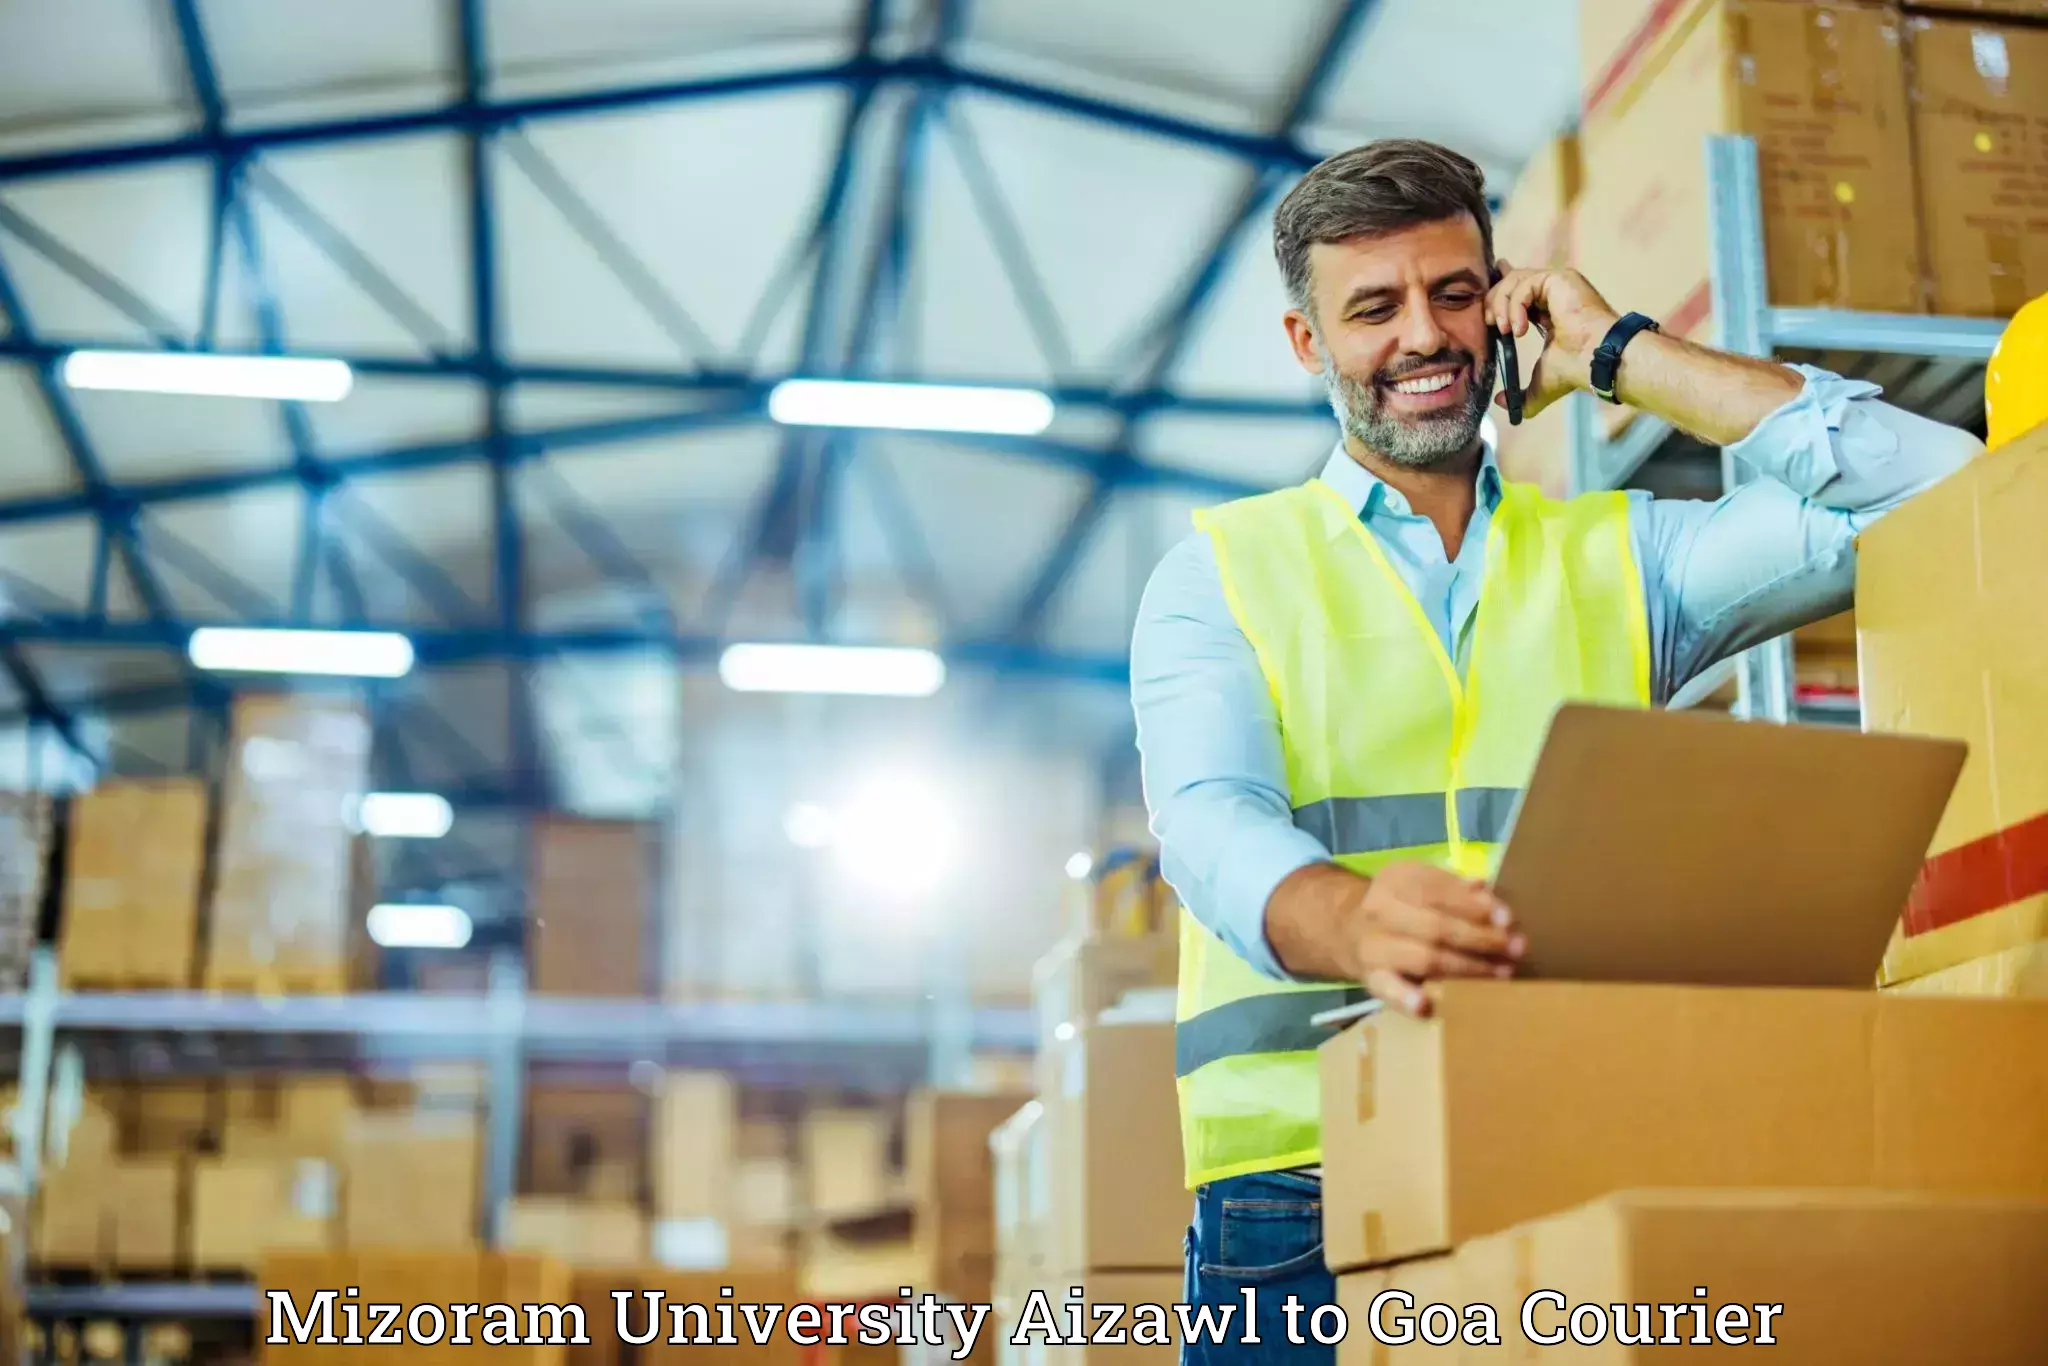 Professional movers and packers Mizoram University Aizawl to Goa